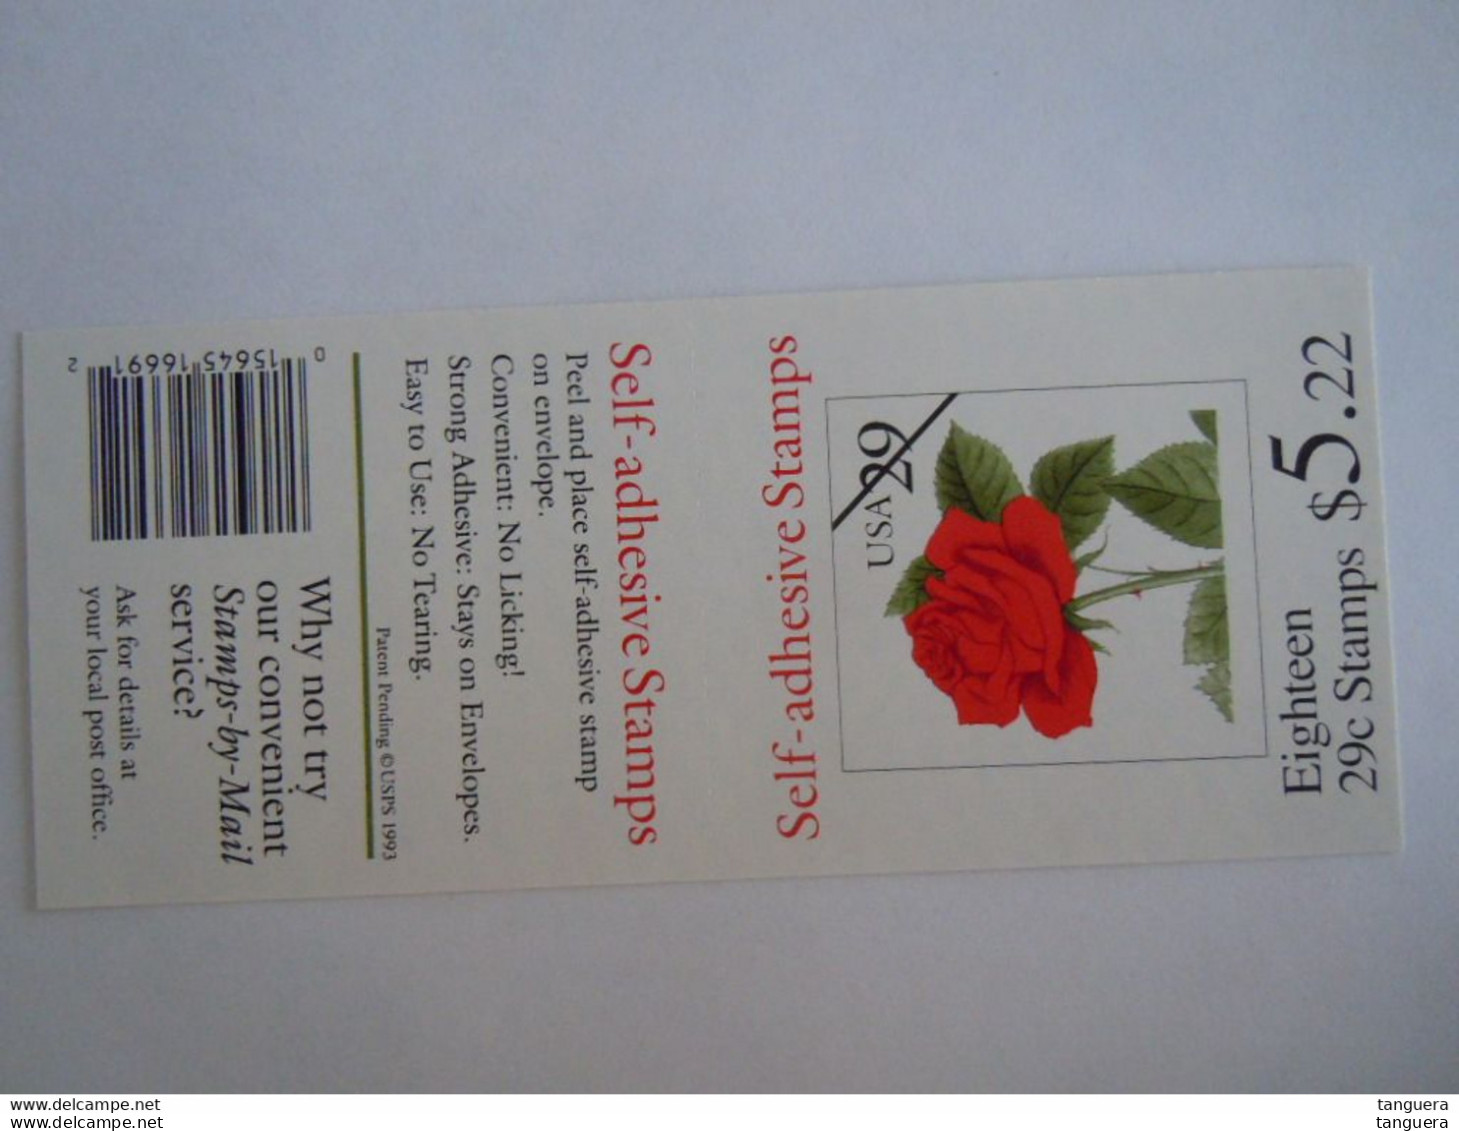 USA  Etats-Unis D'Amerique United States 1993 ATM Roos Roze Rose YV C2186 2186 Sc 2490a MNH ** Booklet Pane - 1981-...